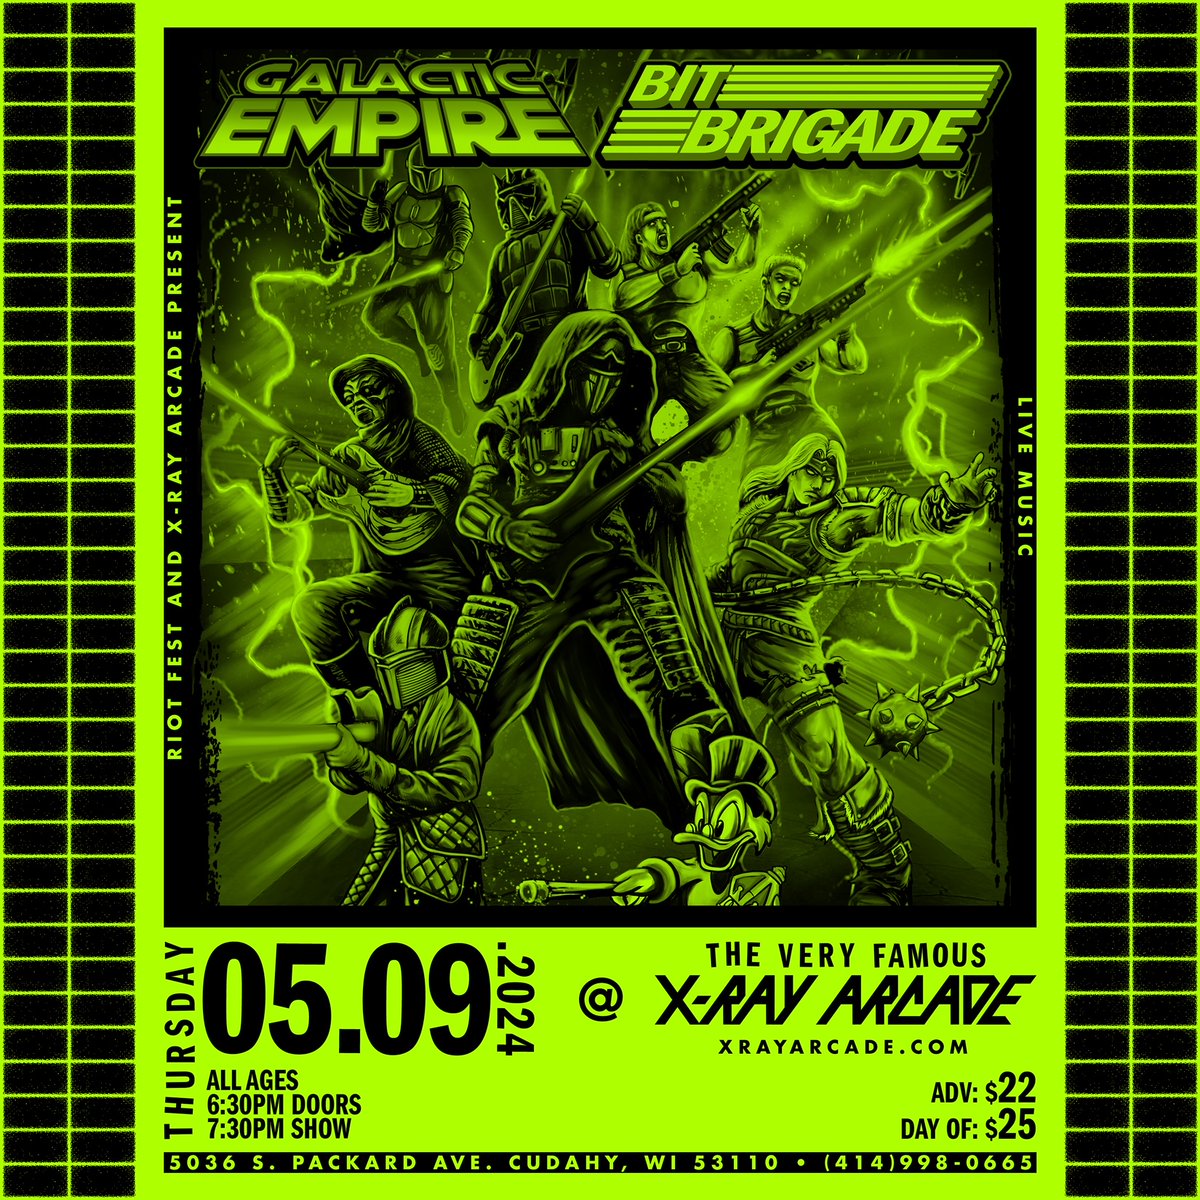 ON SALE NOW! Brit Brigade & @GalacticEmpire8 on May 9 at @xrayarcade -> bit.ly/XRAY-BBGE